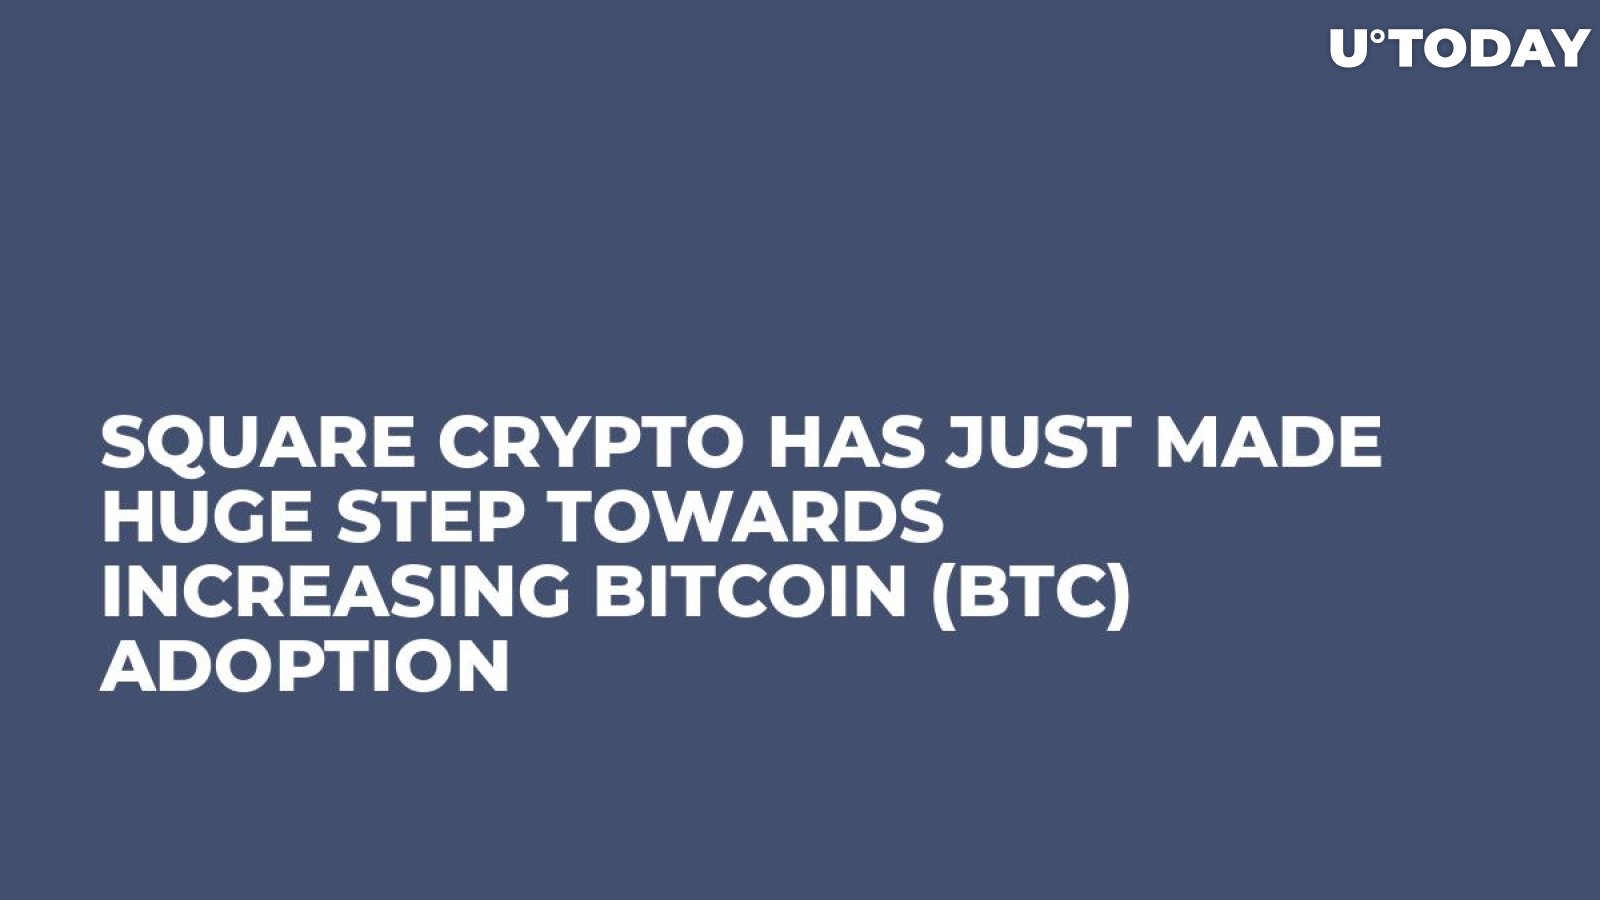 Square Crypto Has Just Made Huge Step Towards Increasing Bitcoin (BTC) Adoption